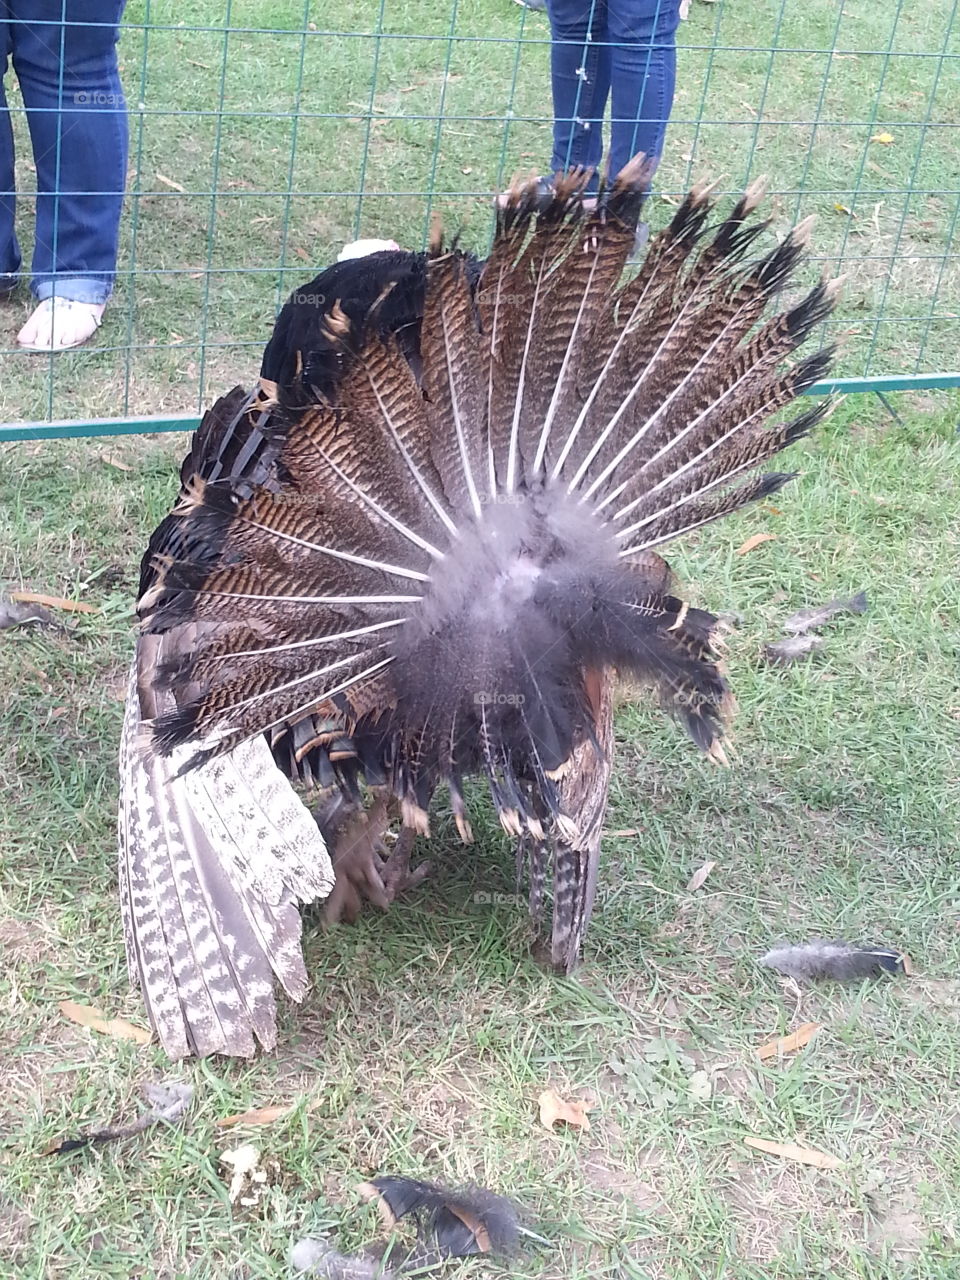 Turkey. state fair with a turkey